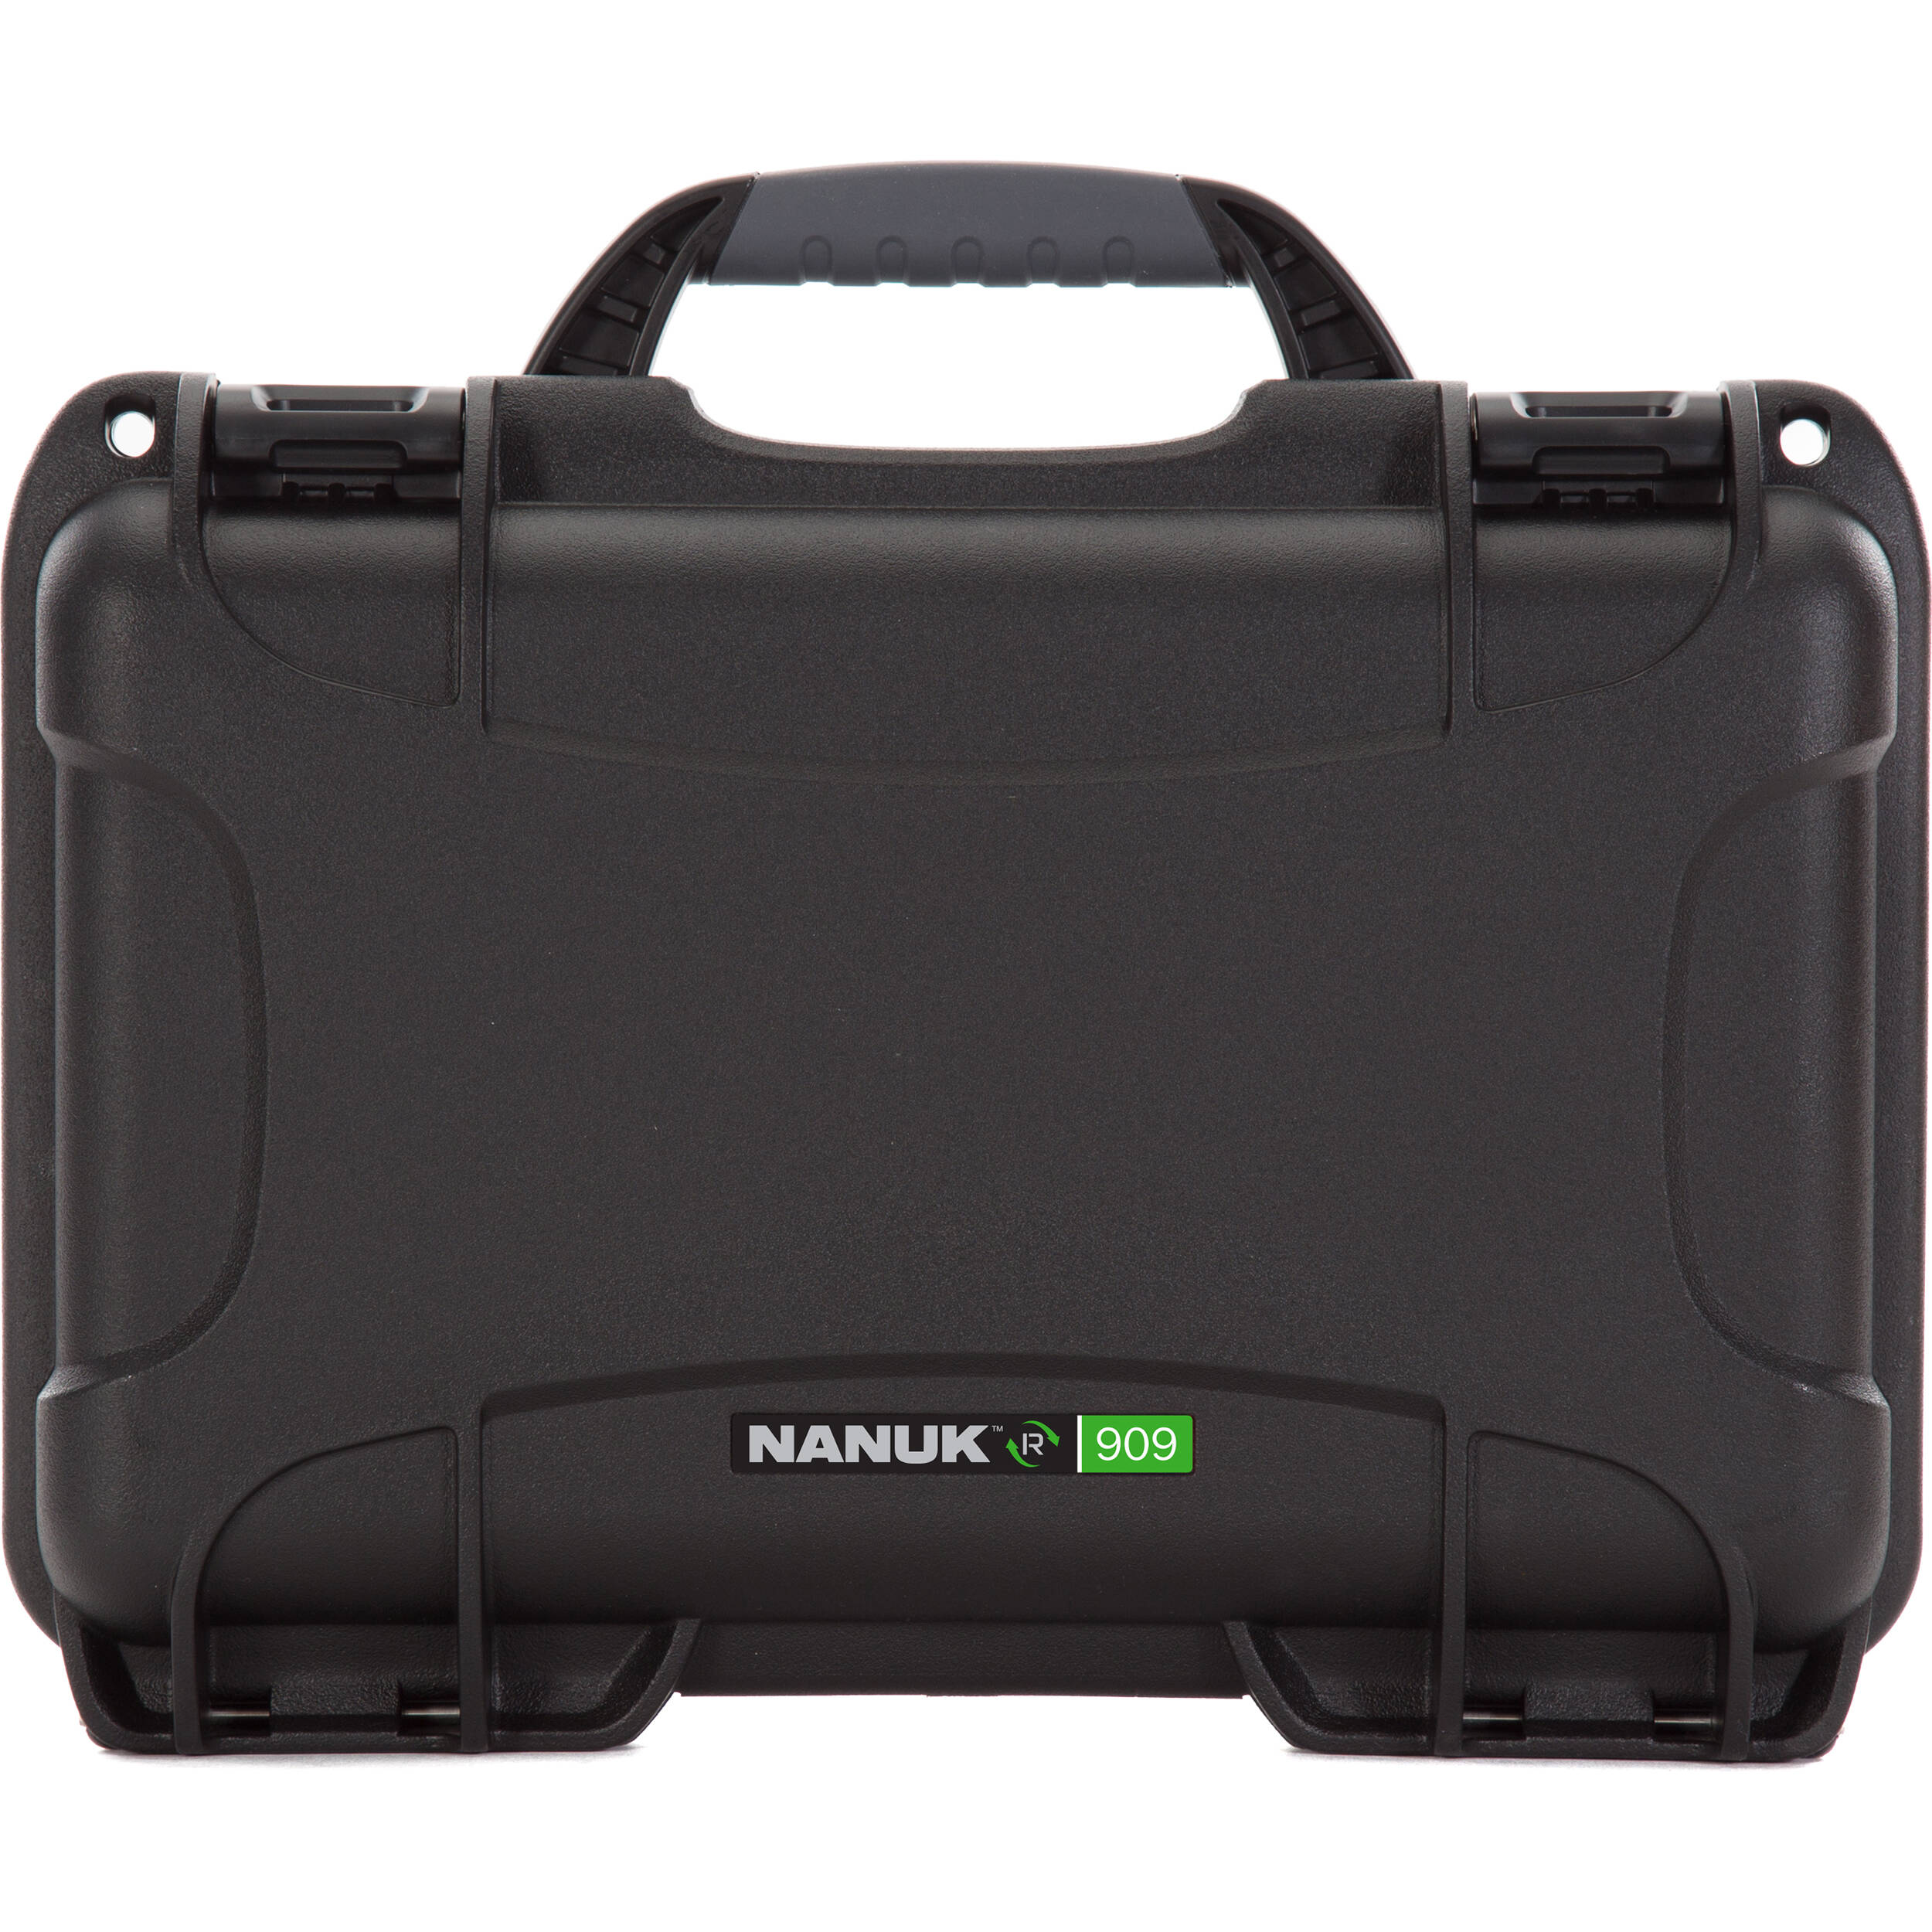 Nanuk R 909 Eco-Friendly Hard Case (Black, 4.8L, Foam Insert)